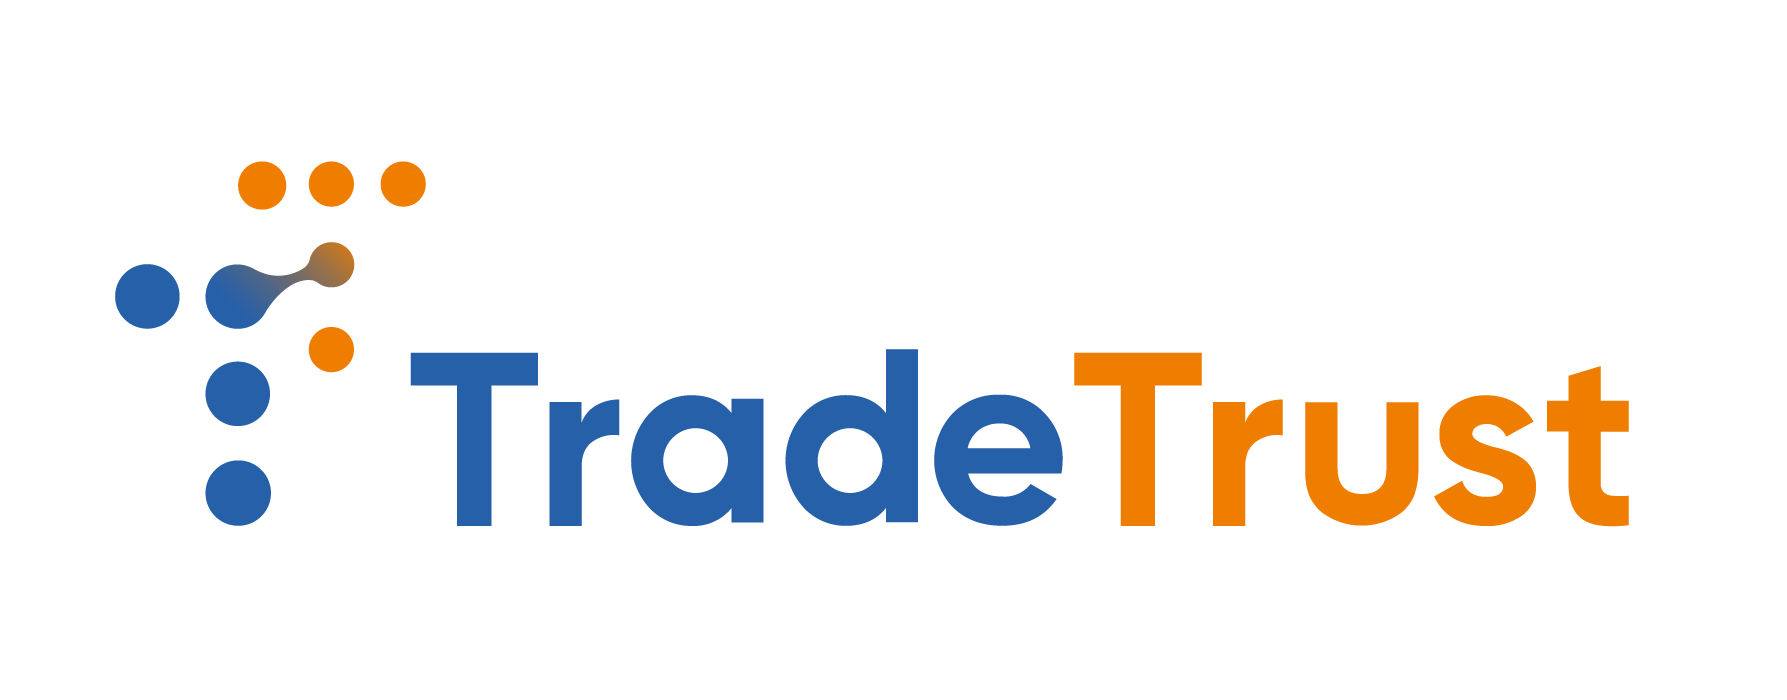 TradeTrust logo